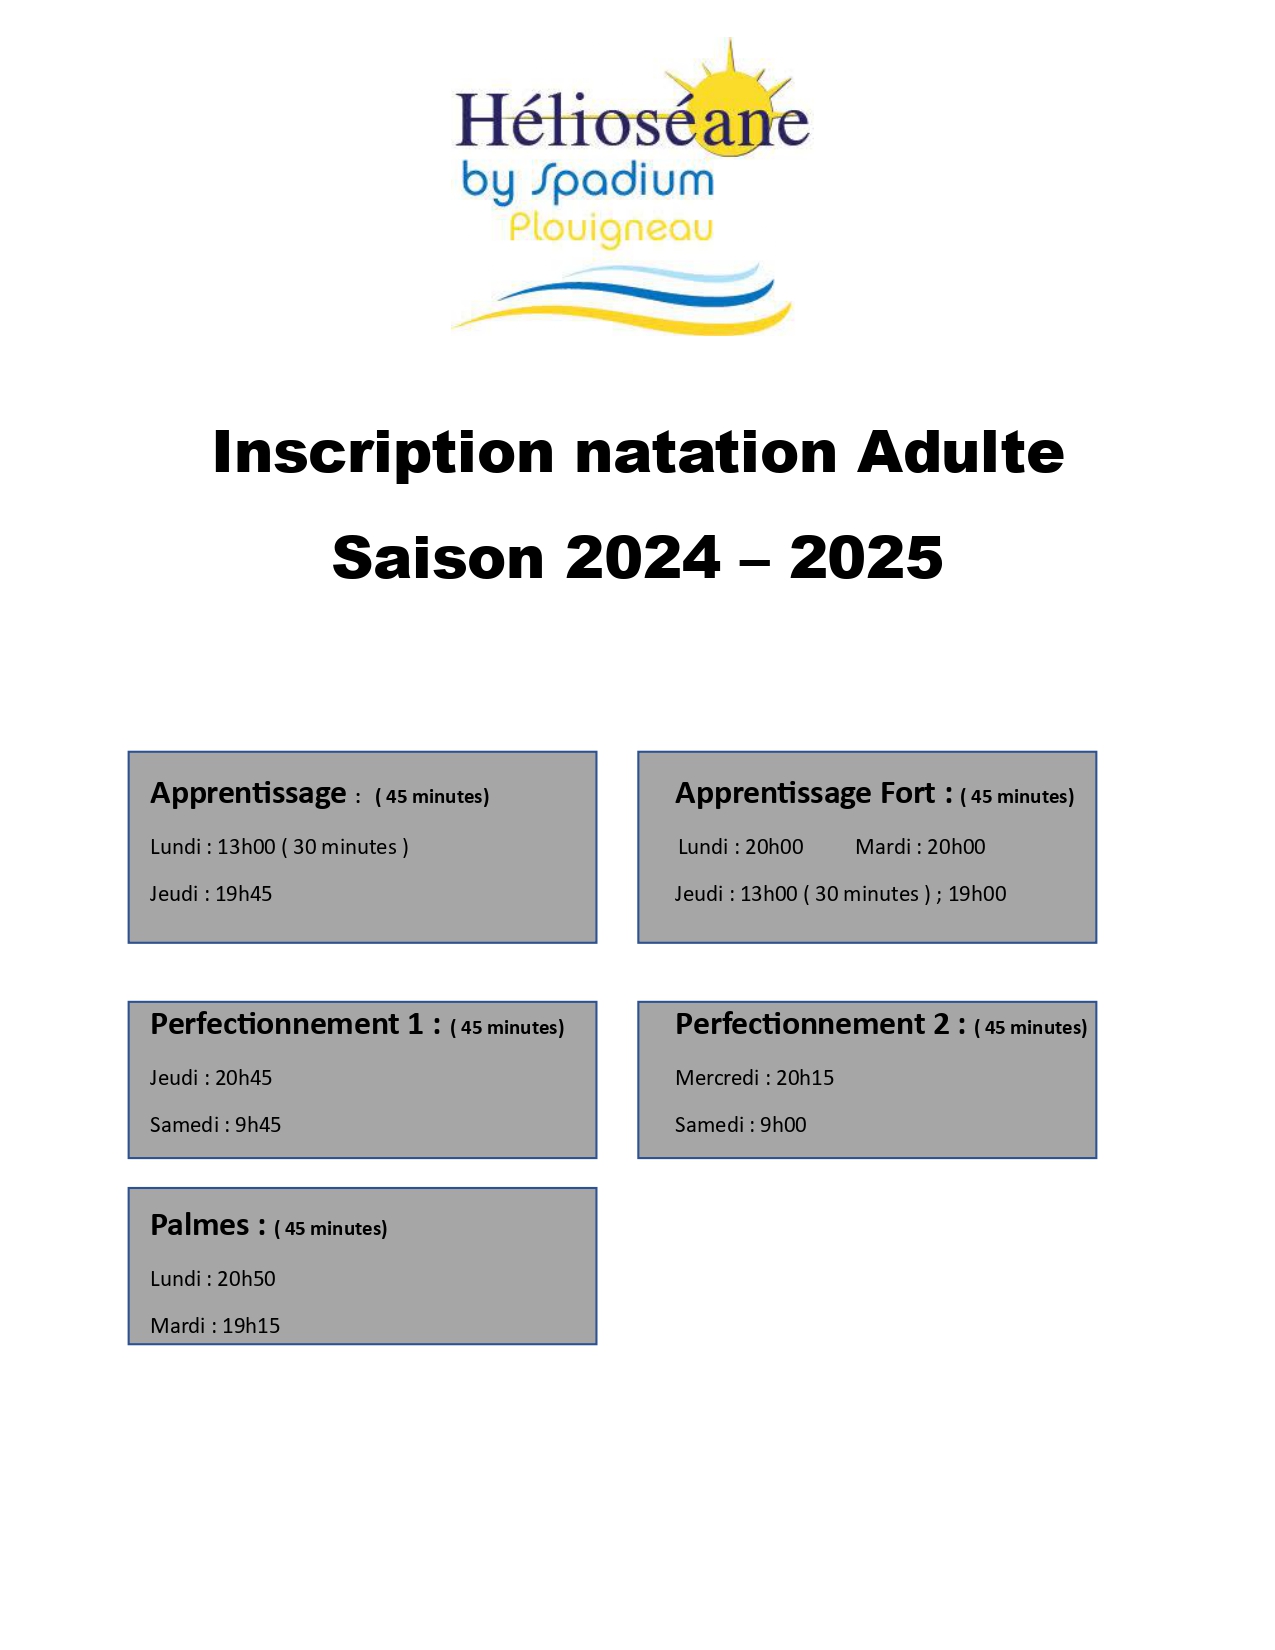 inscription natation adulte 2024 2025_page 0001